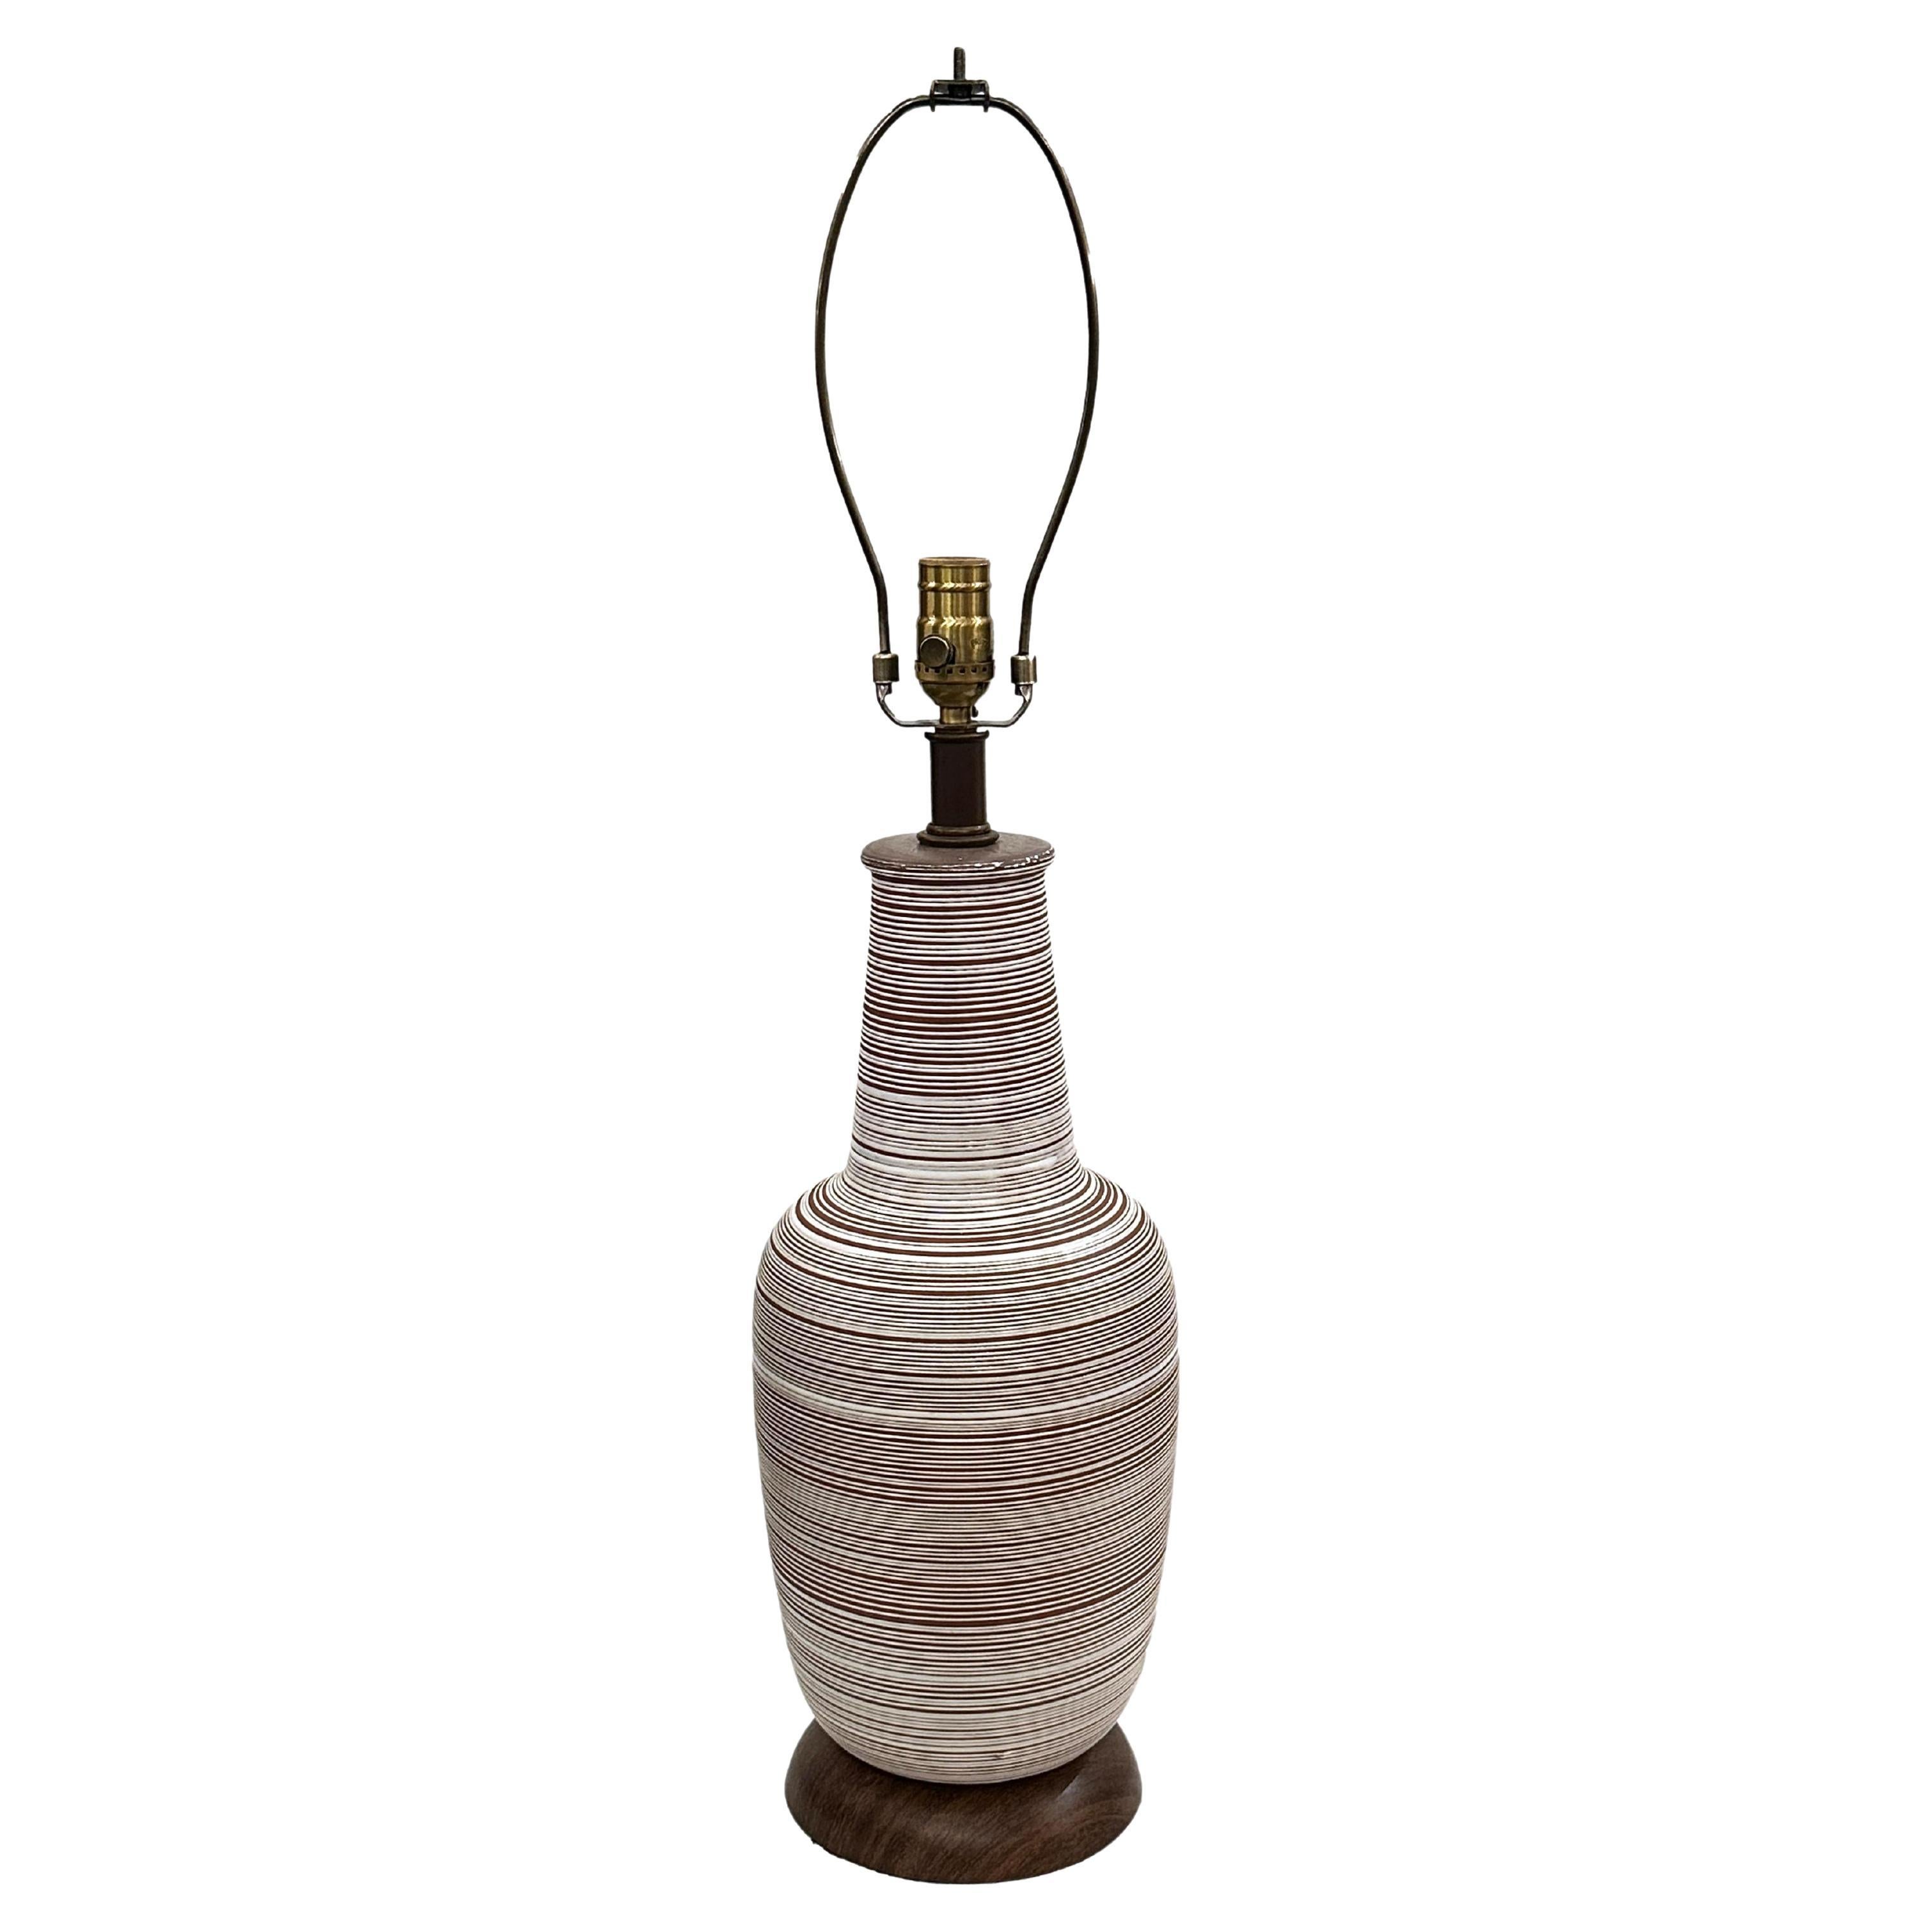 Italian Midcentury Porcelain Lamp